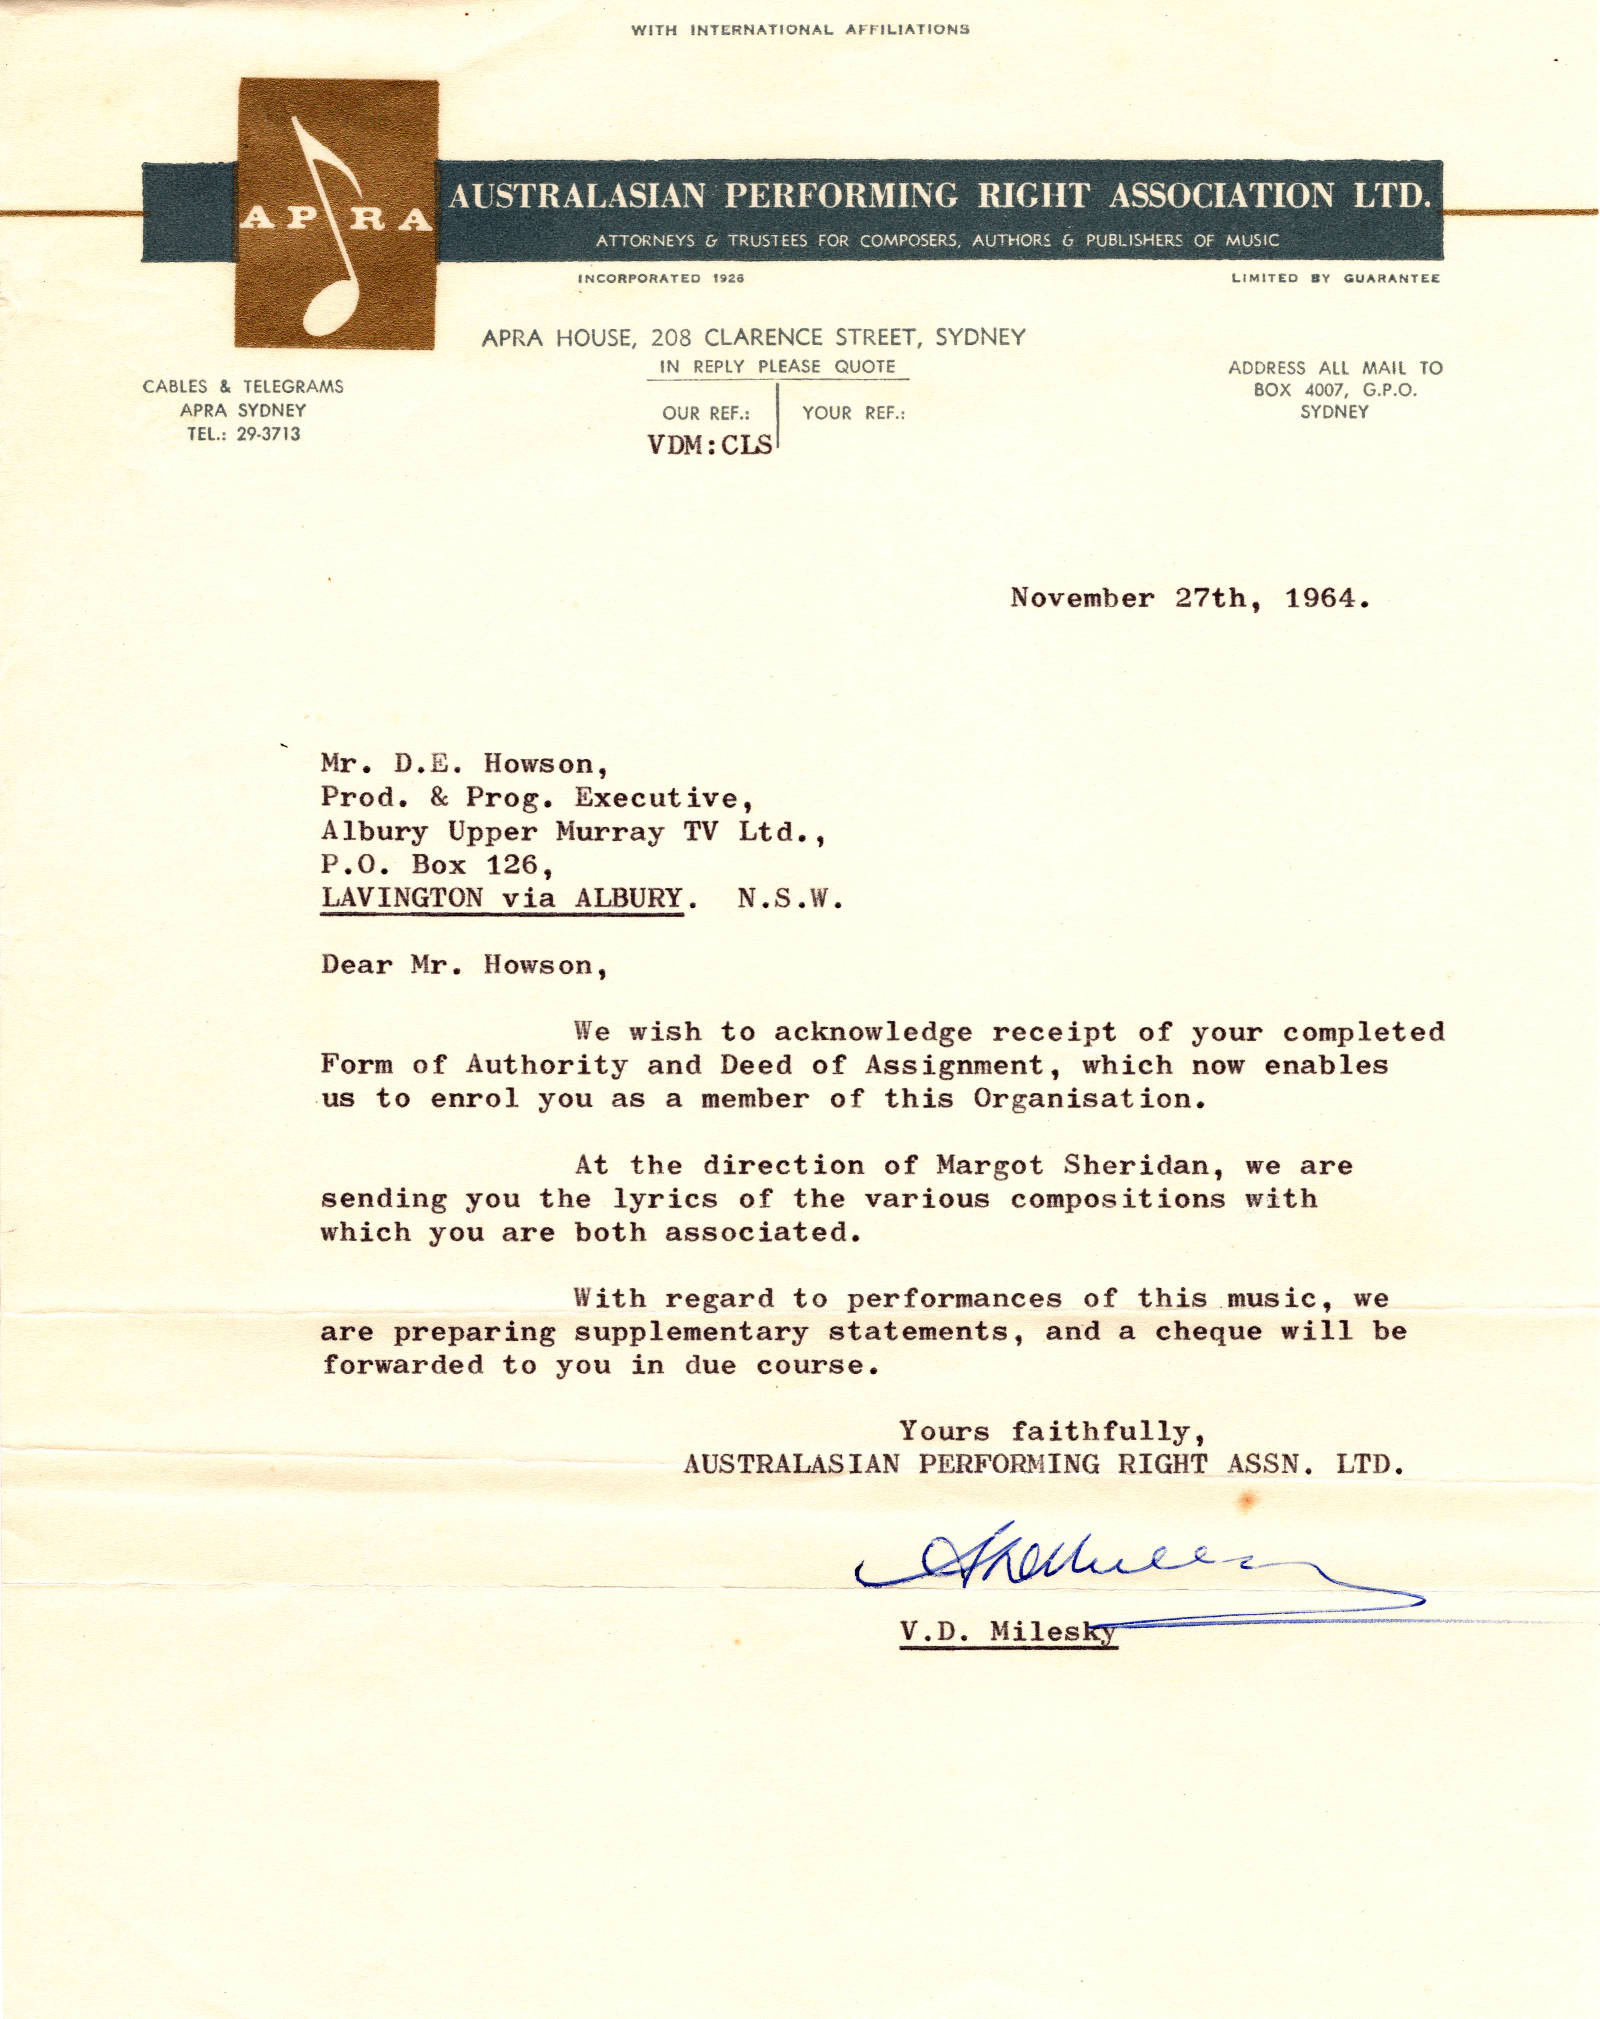 Image of typewritten letter from APRA in November 1964.